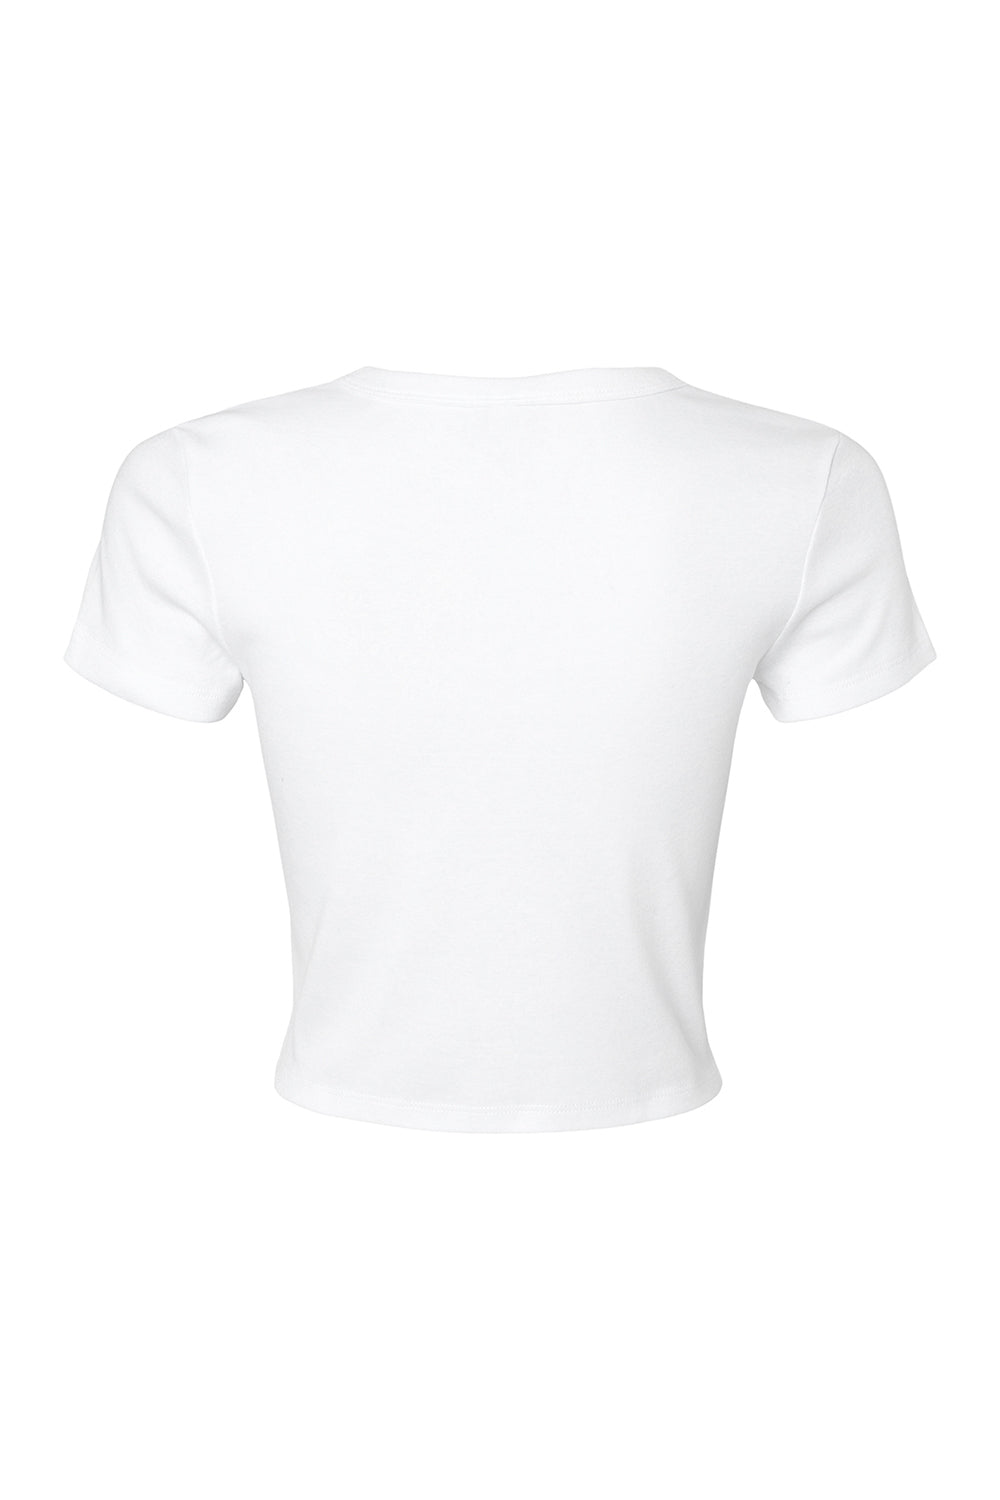 Bella + Canvas 1010BE Womens Micro Ribbed Short Sleeve Crewneck Baby T-Shirt White Flat Back